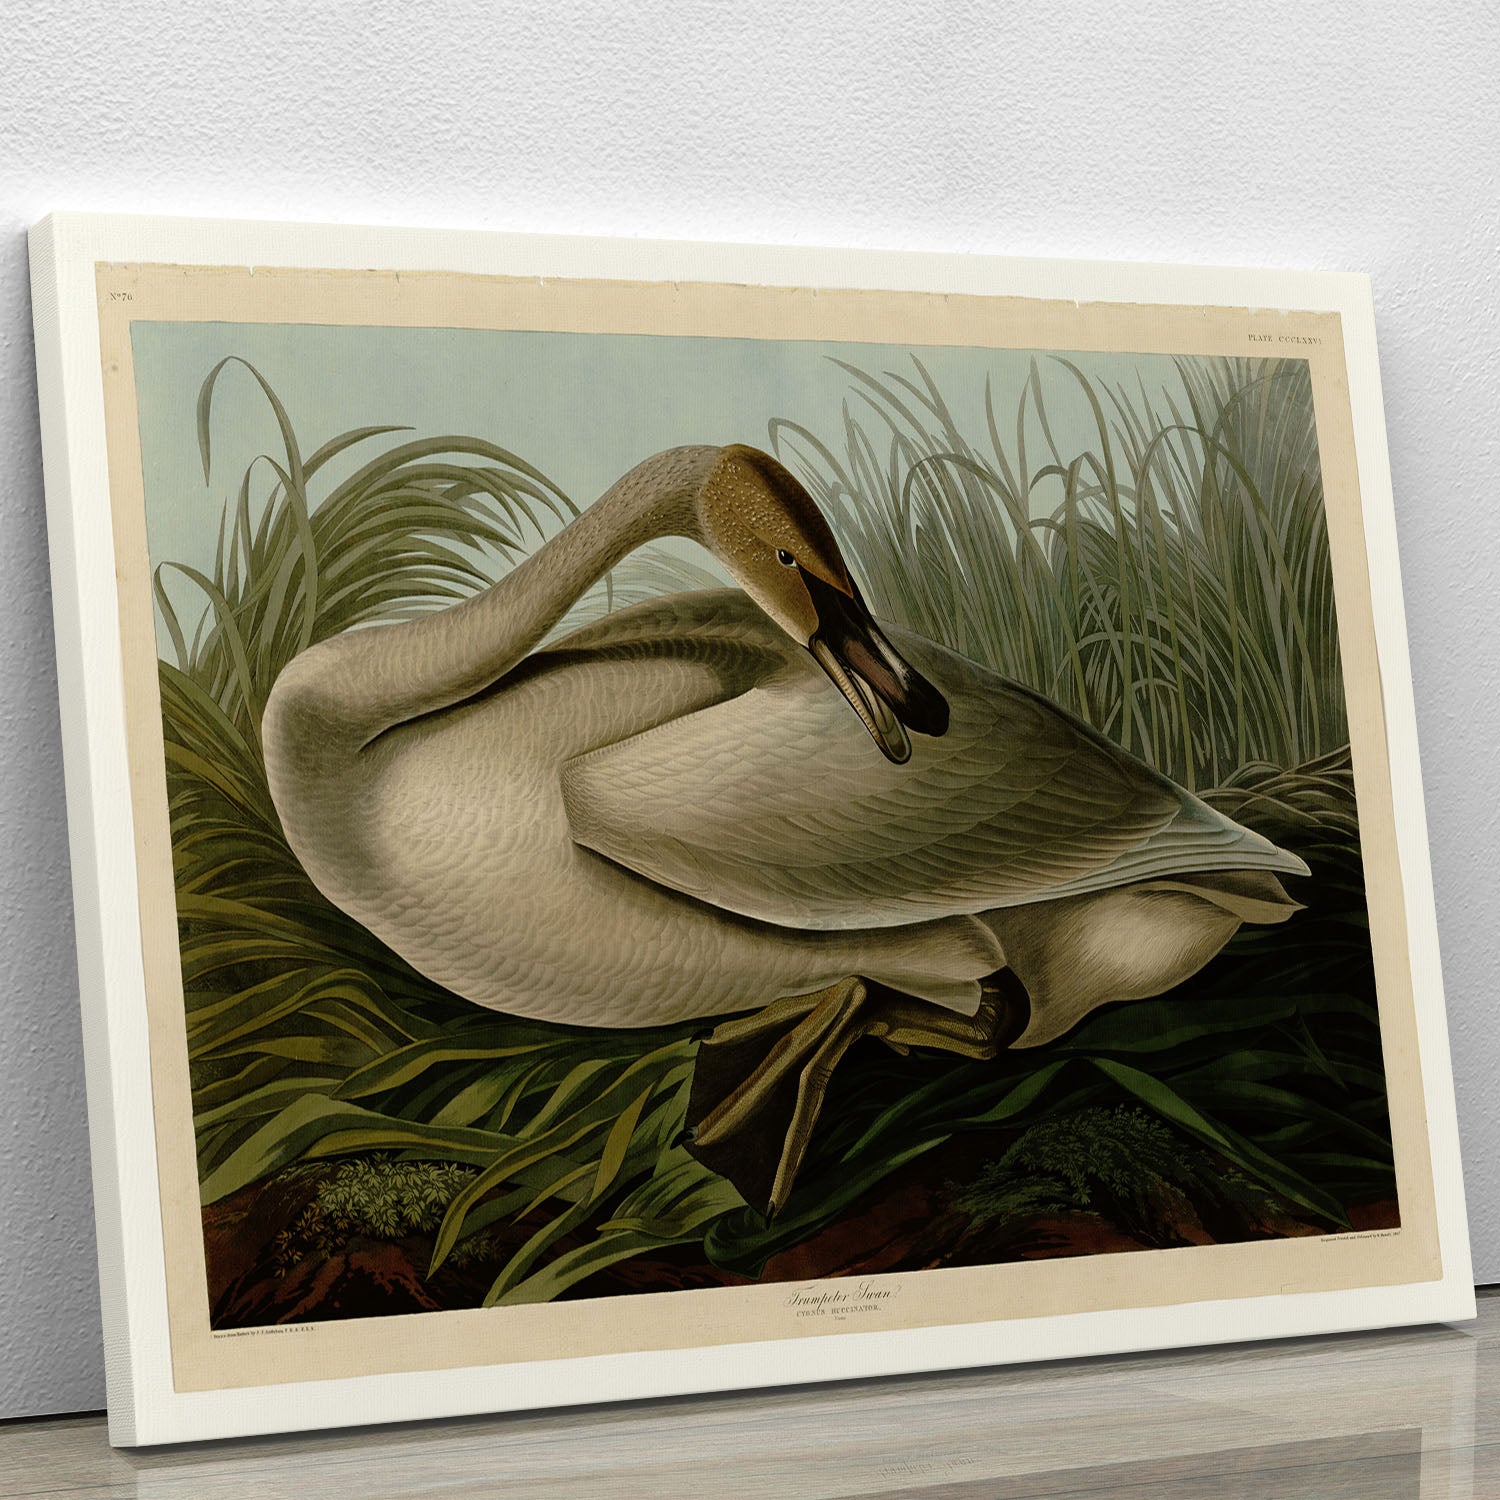 Trumpeter_Swan by Audubon Canvas Print or Poster - Canvas Art Rocks - 1